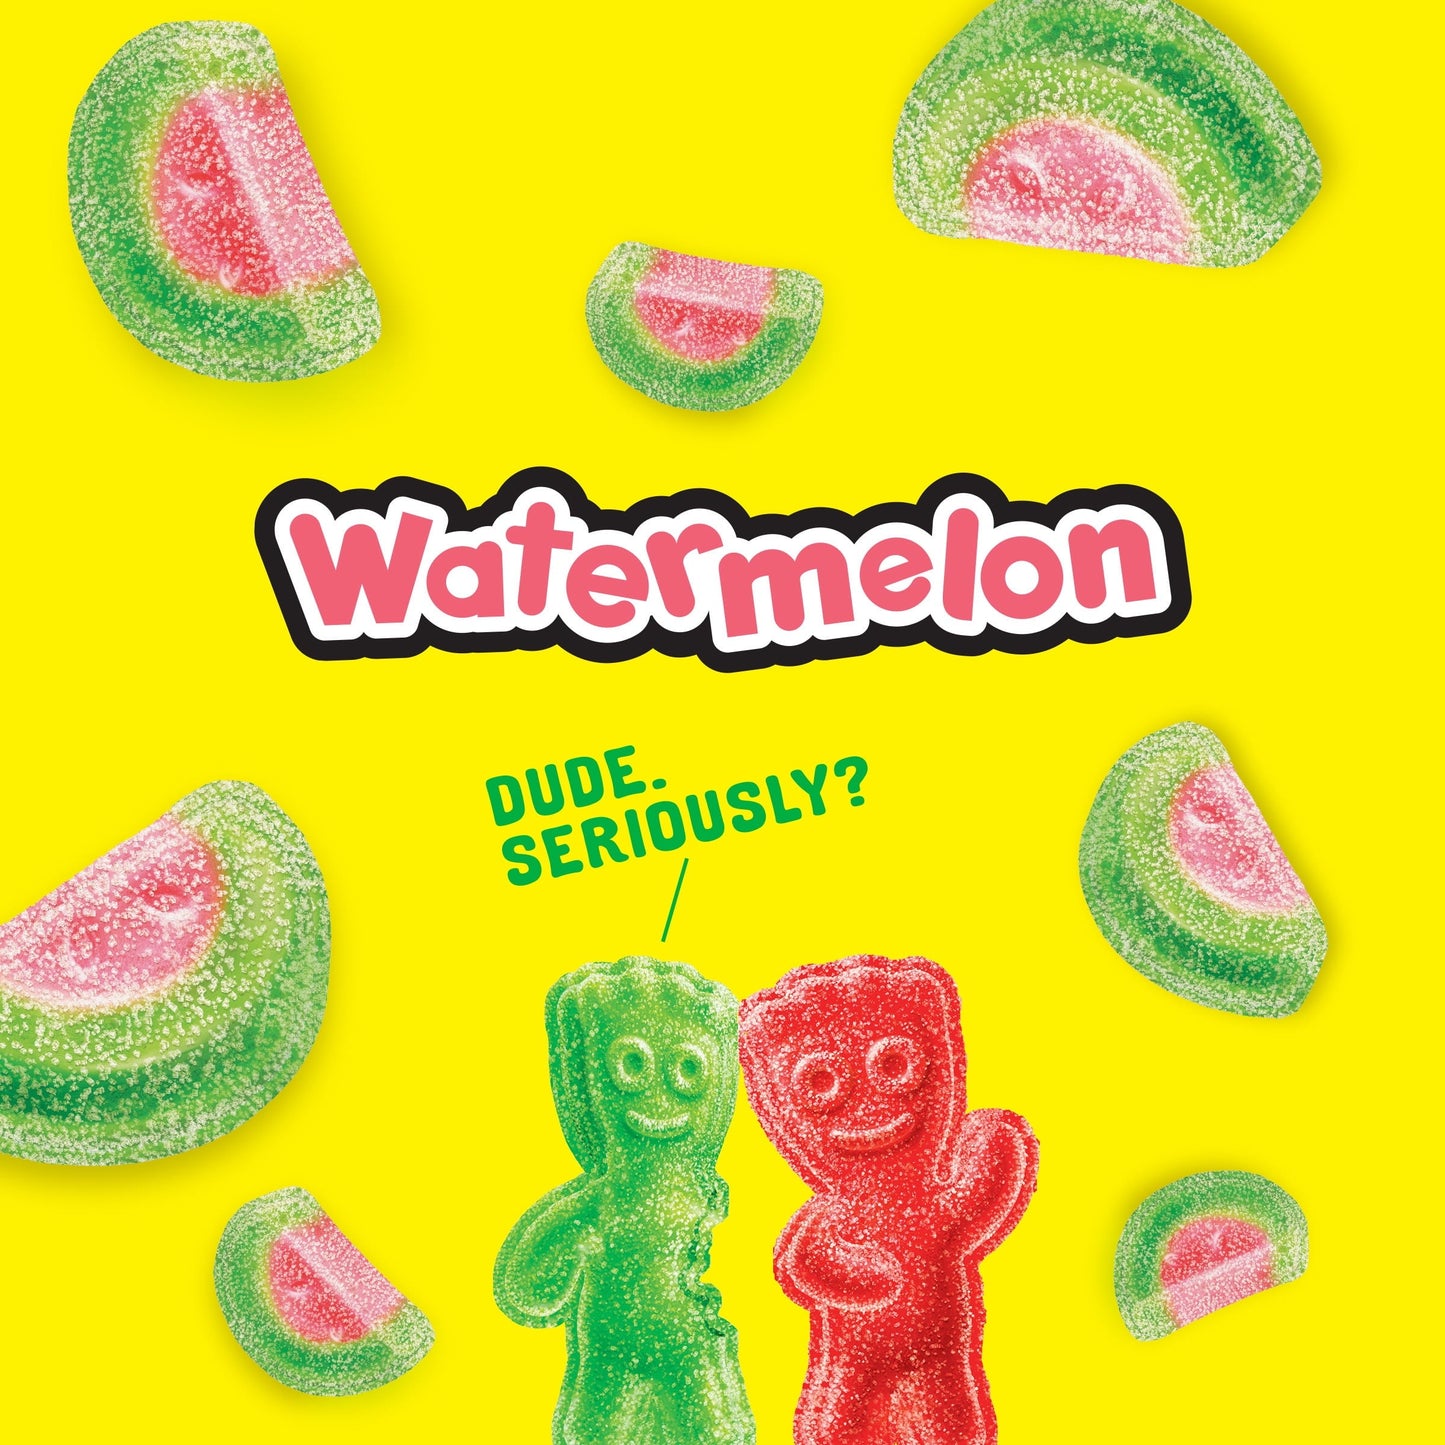 SOUR PATCH KIDS Watermelon Soft & Chewy Candy, 3.6 oz